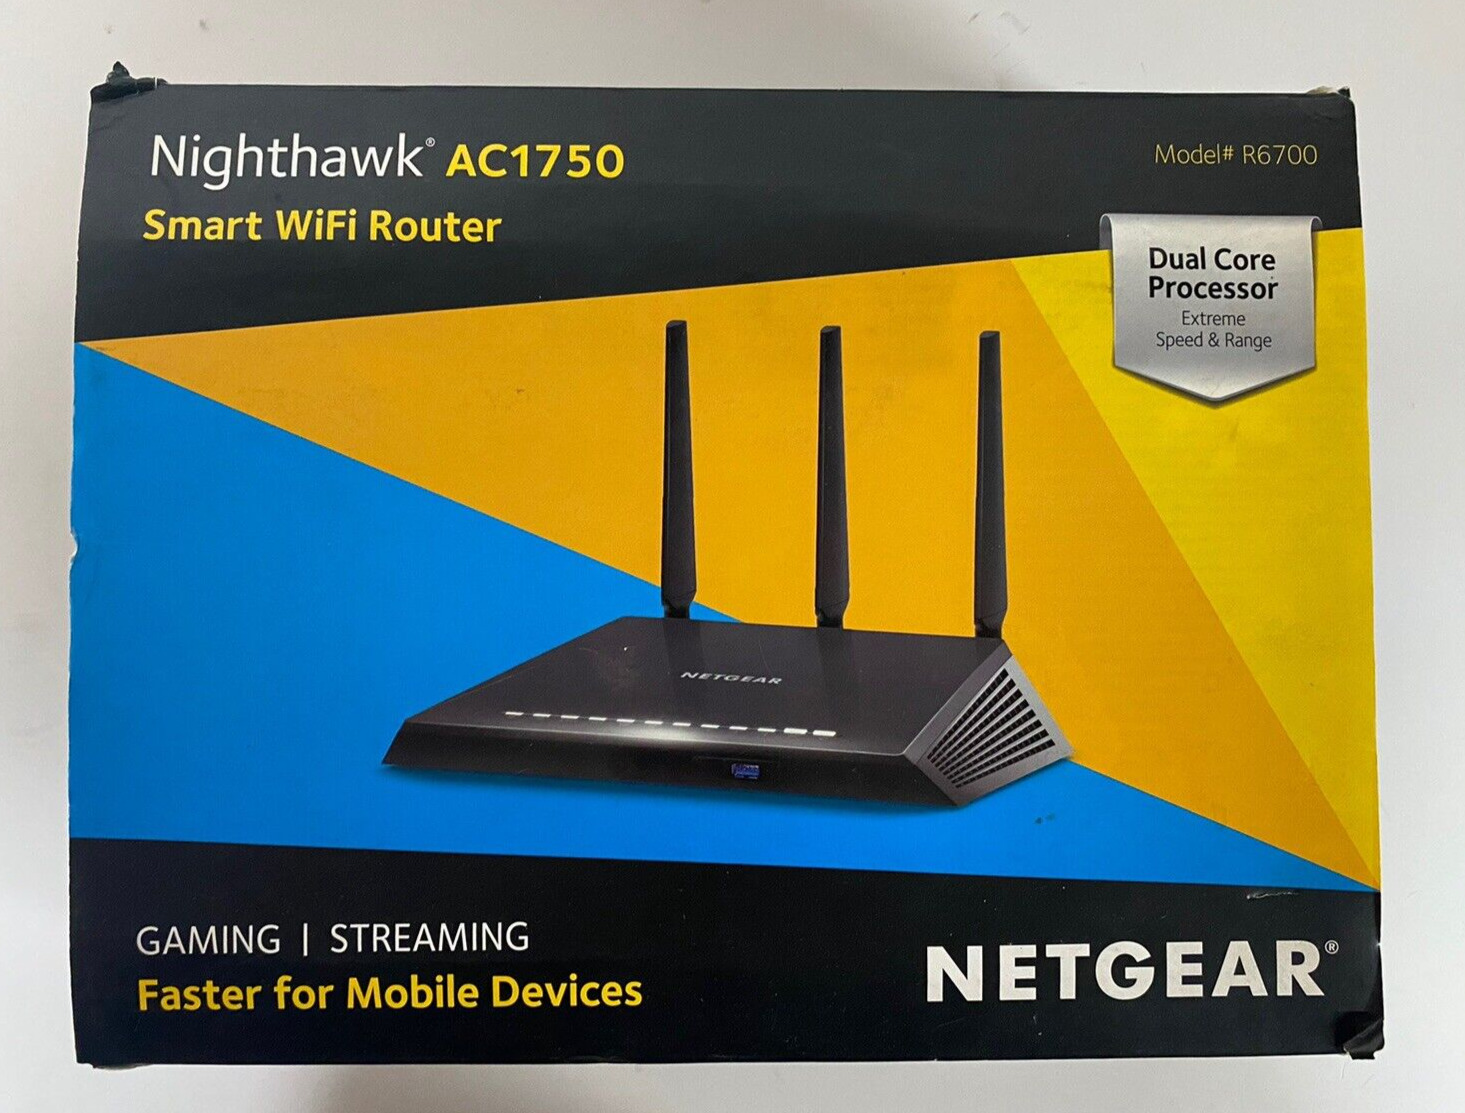 NETGEAR R6700 Nighthawk AC1750 Smart WiFi Router Gaming Streaming Extreme Range